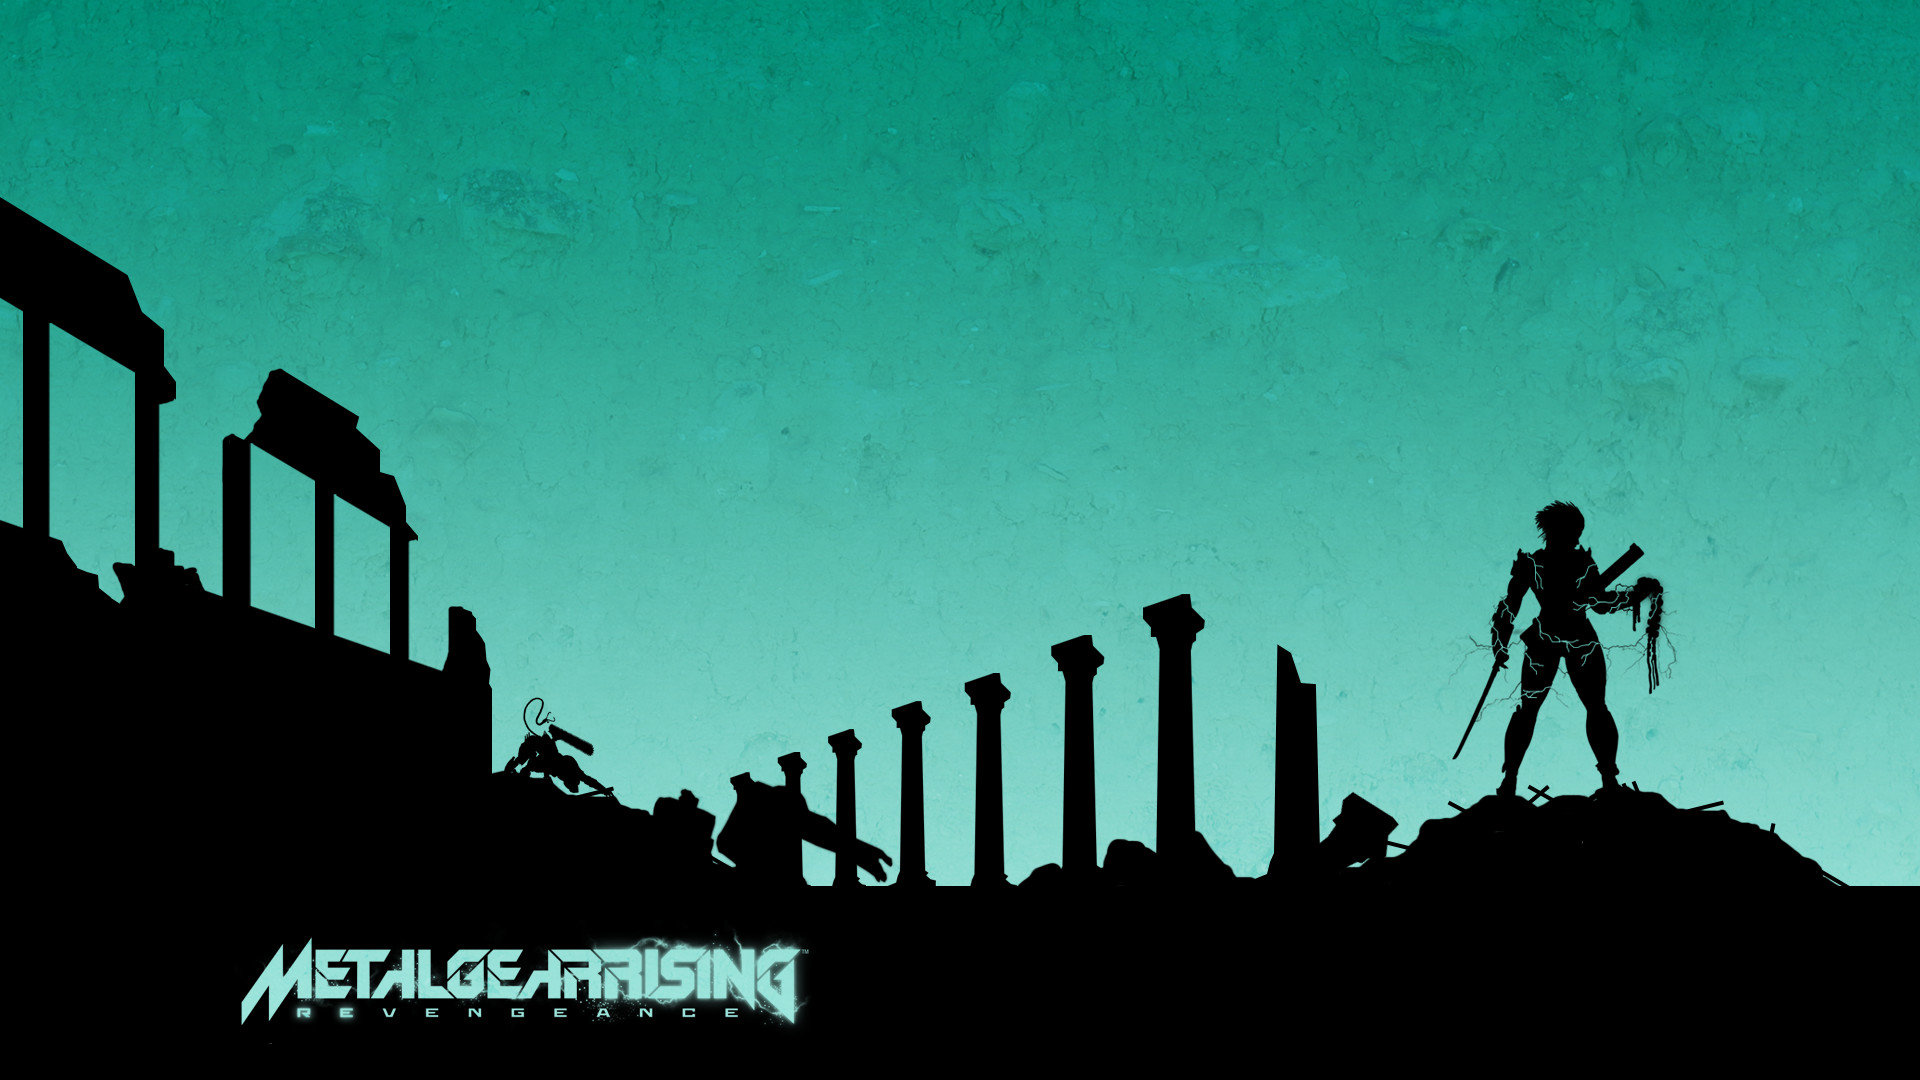 High resolution Metal Gear Rising: Revengeance (MGR) full hd wallpaper ID:130596 for PC